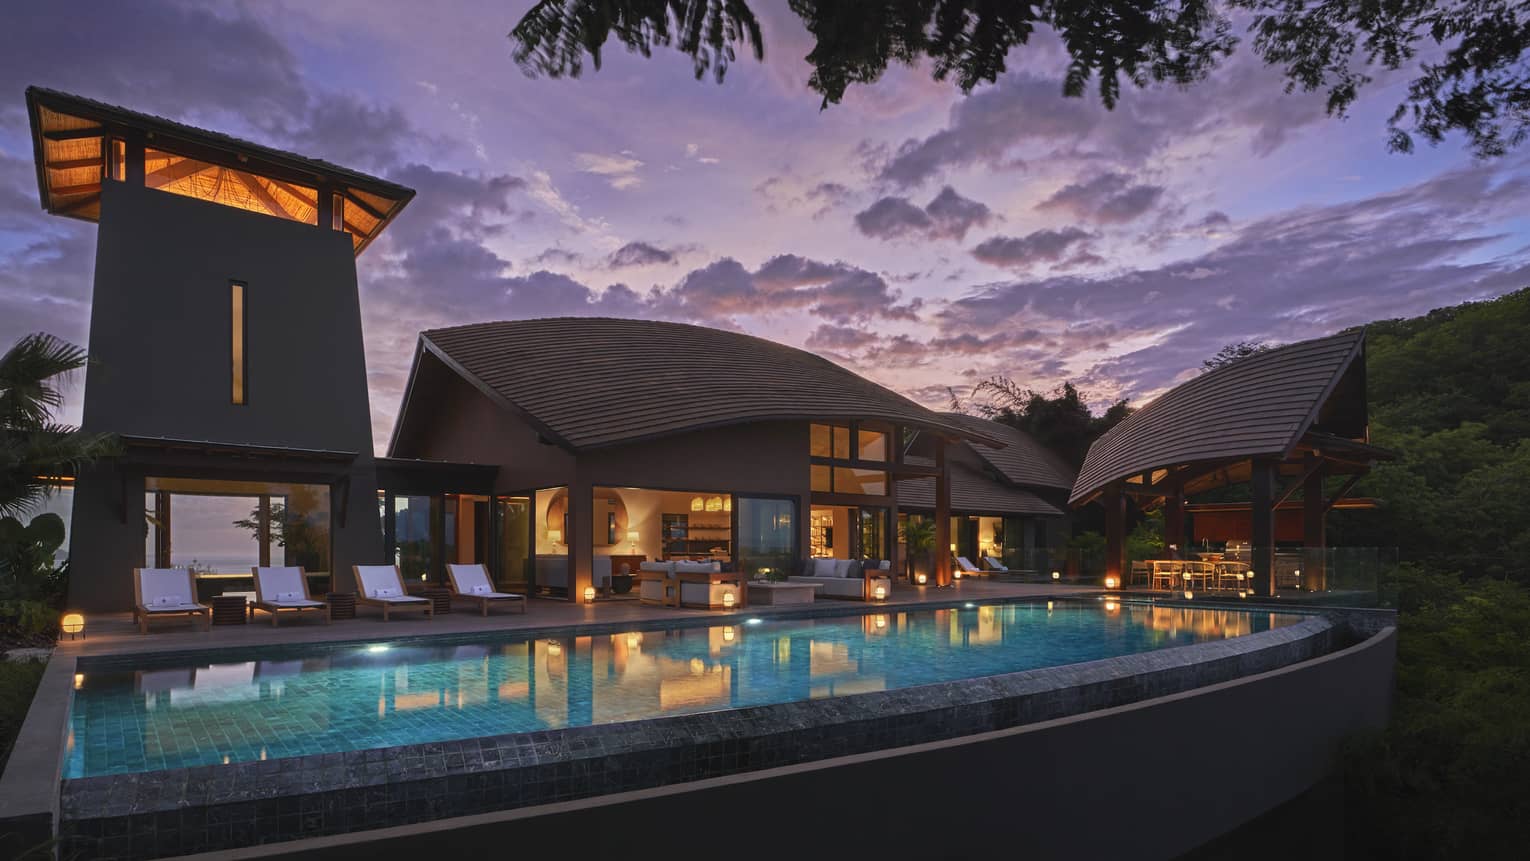 Private villa and pool illuminated at night